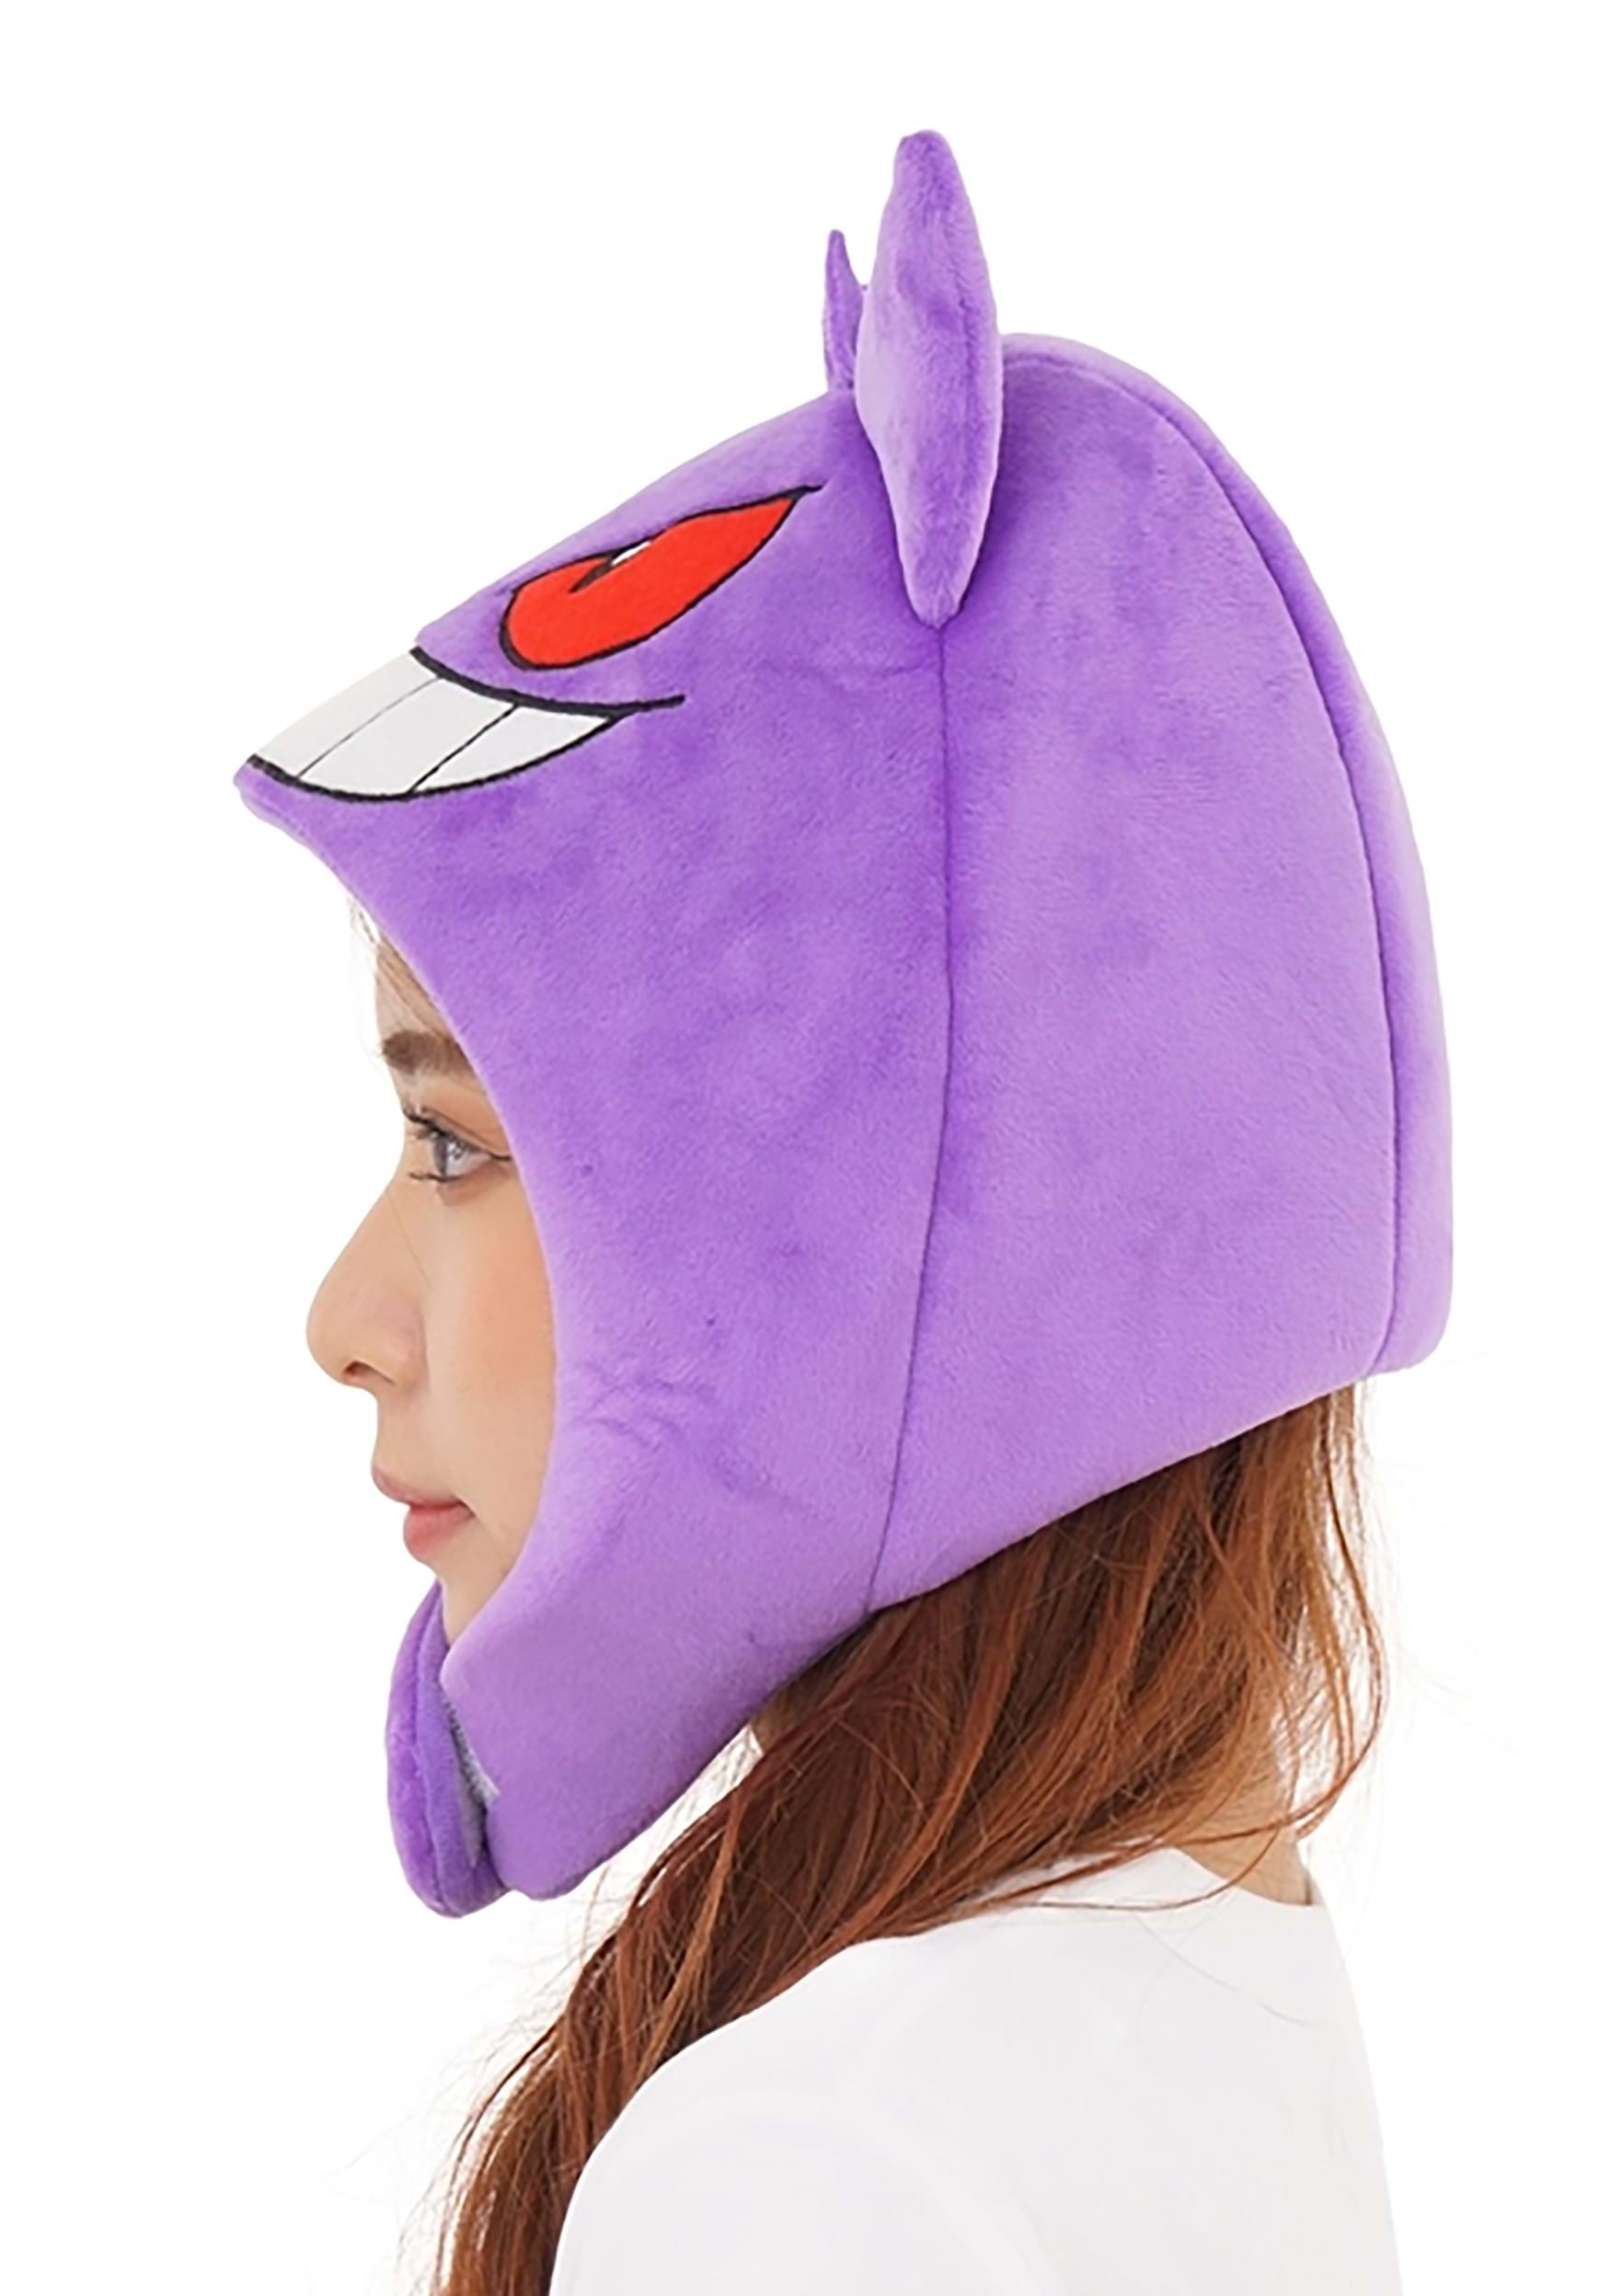 Gengar Pokémon Adult Headpiece Costume